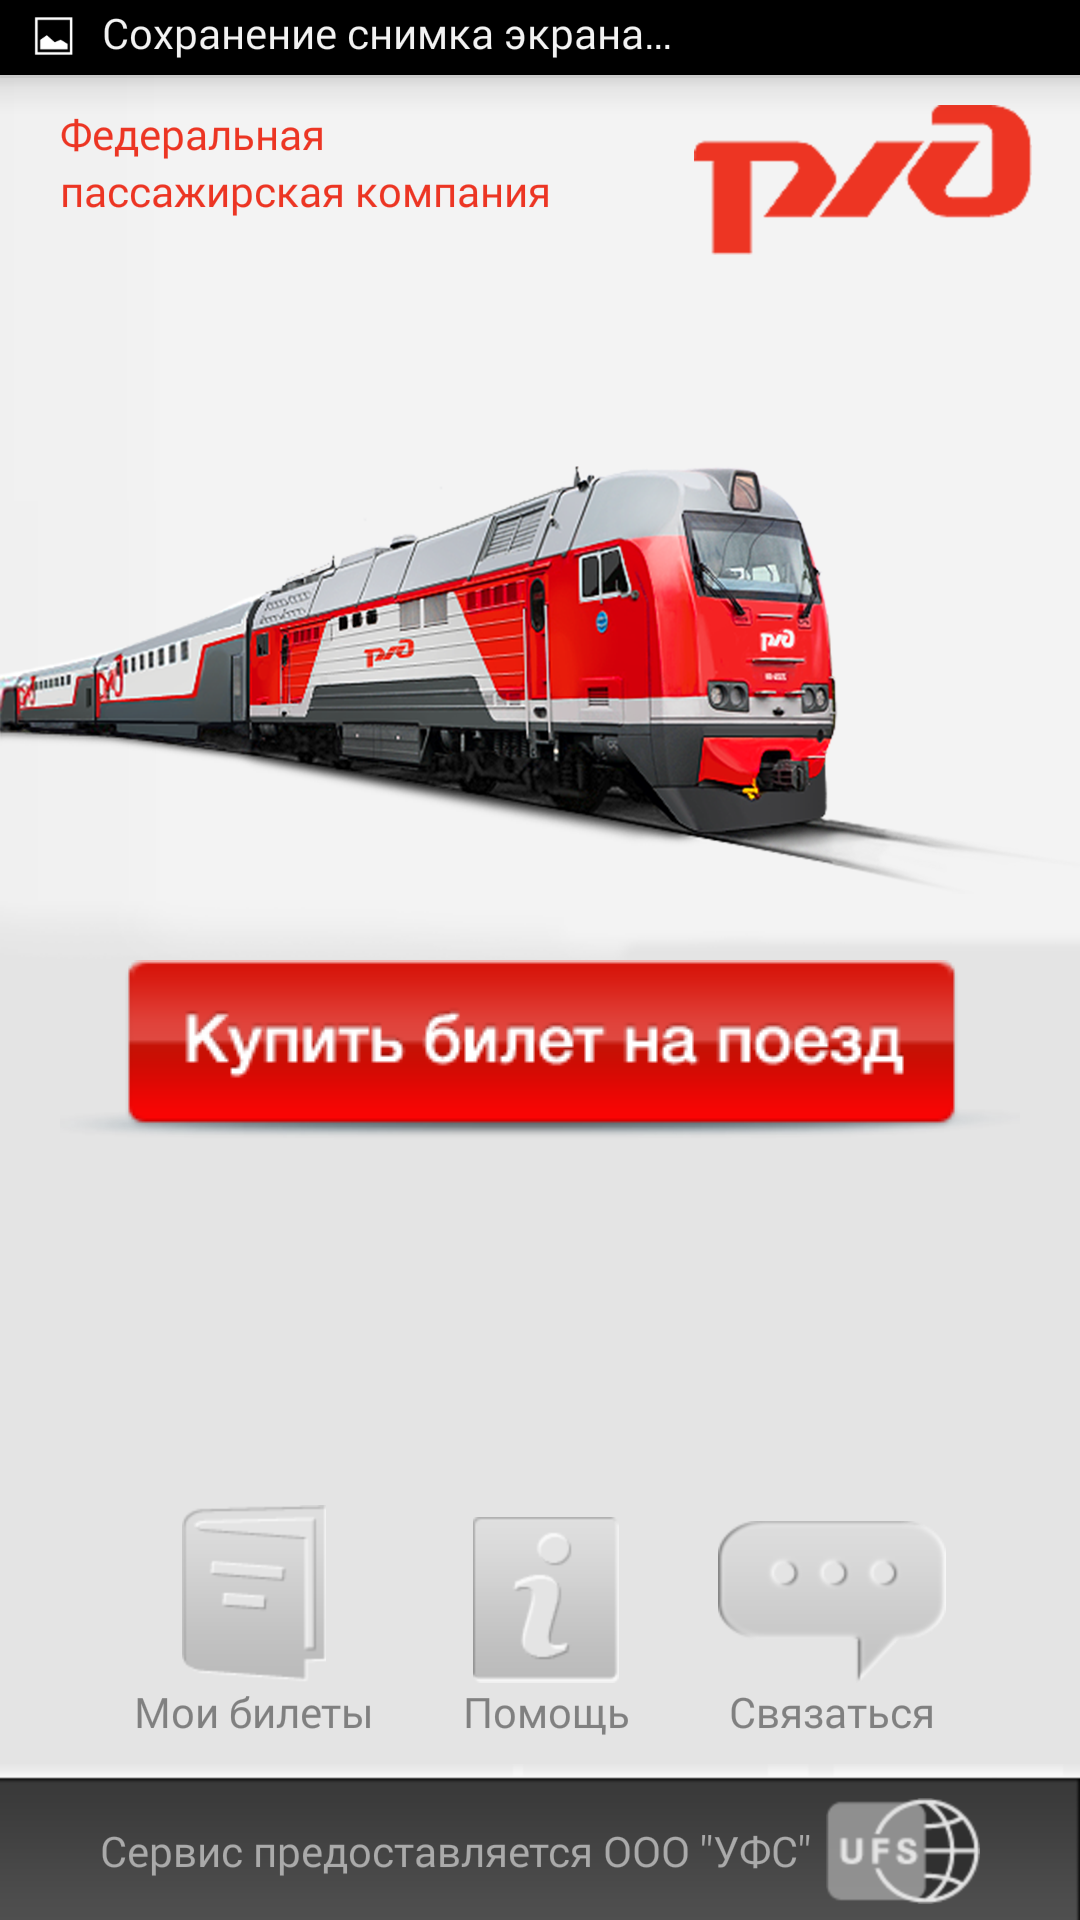 Android application ЖД Билеты Онлайн screenshort